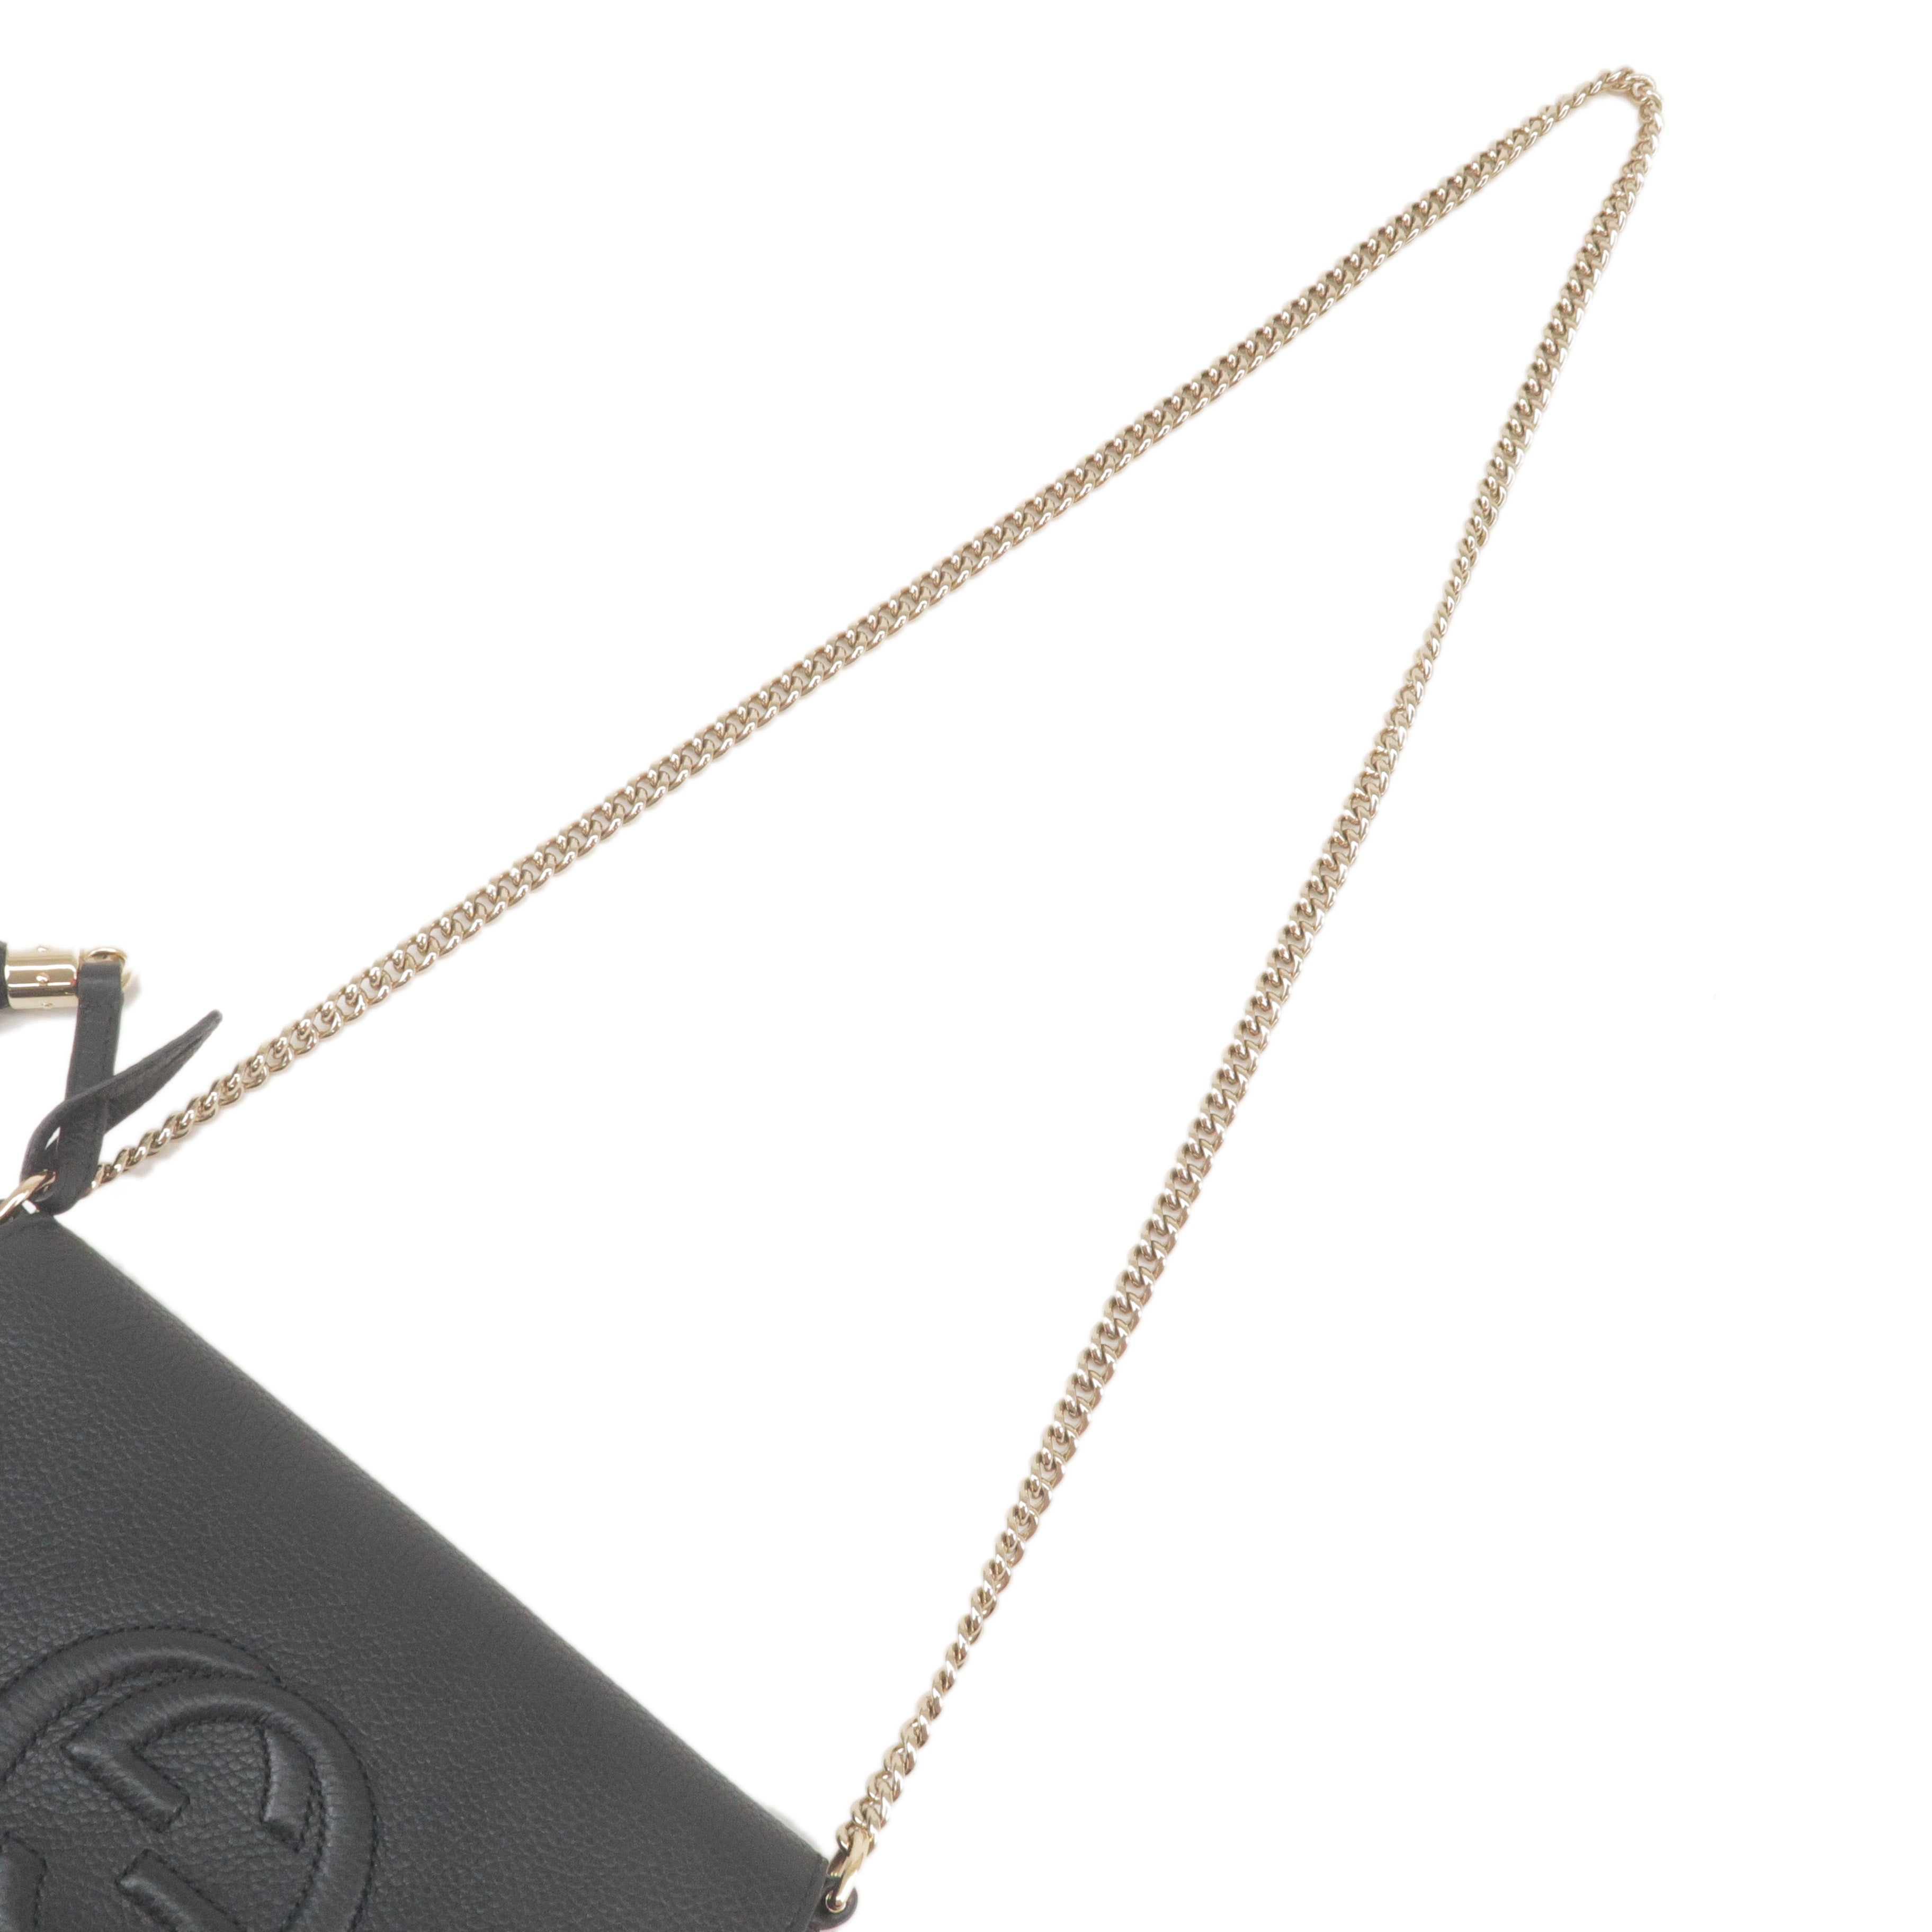 Buy Gucci Black Moon Chain Signature Bag Wallet Bag Purse Italy Leather  Handbag New at Amazon.in